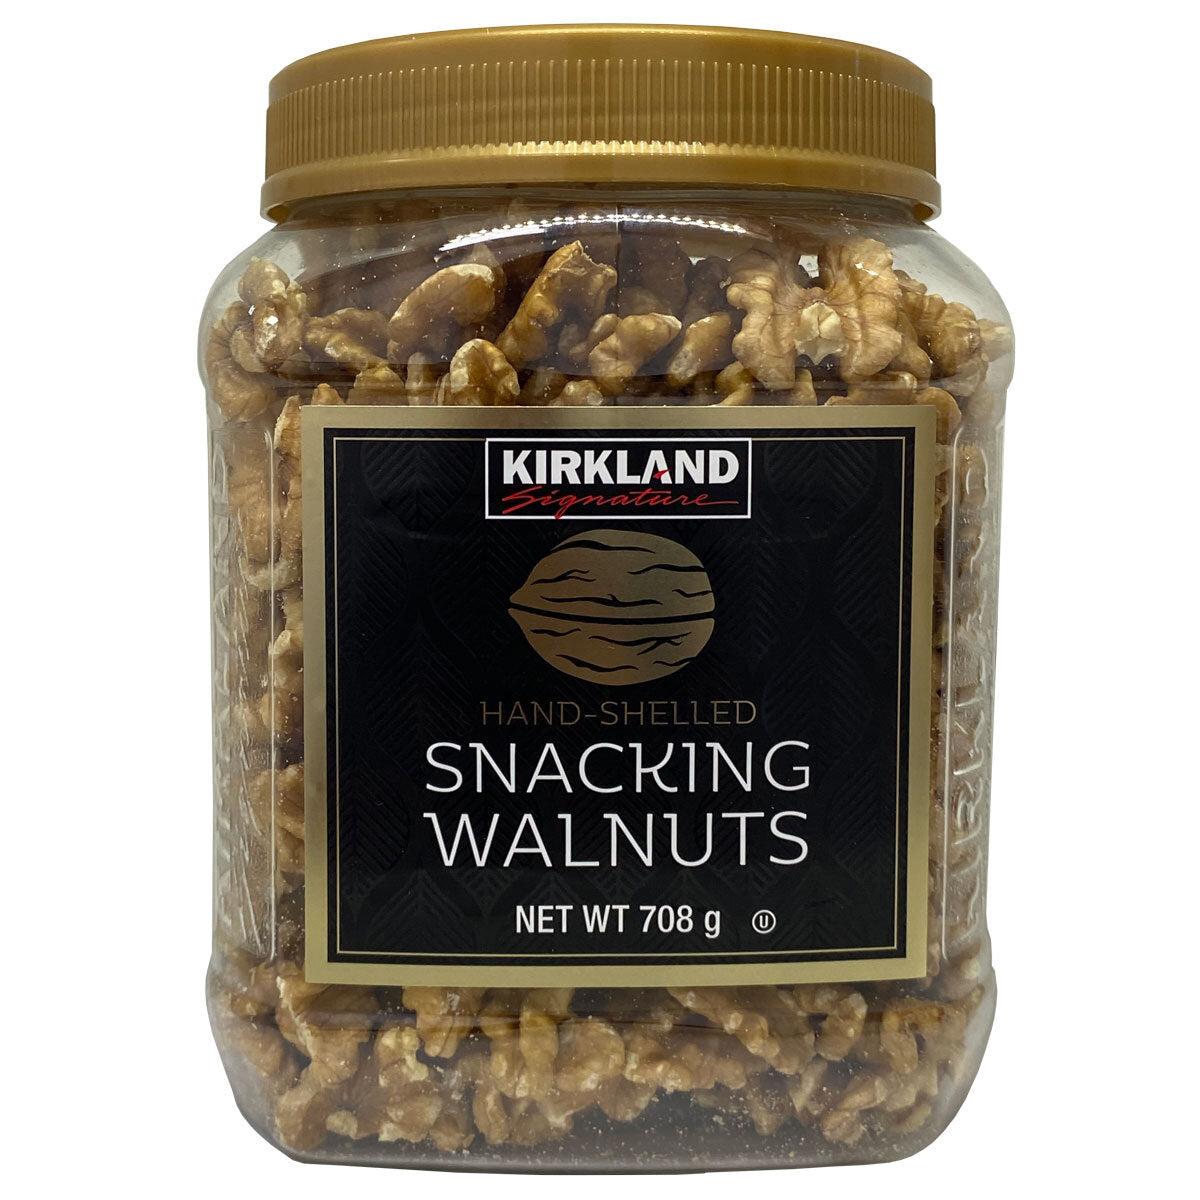 Kirkland Signature Hand-Shelled Snacking Walnuts, 708g Healthy Snacks Costco UK   